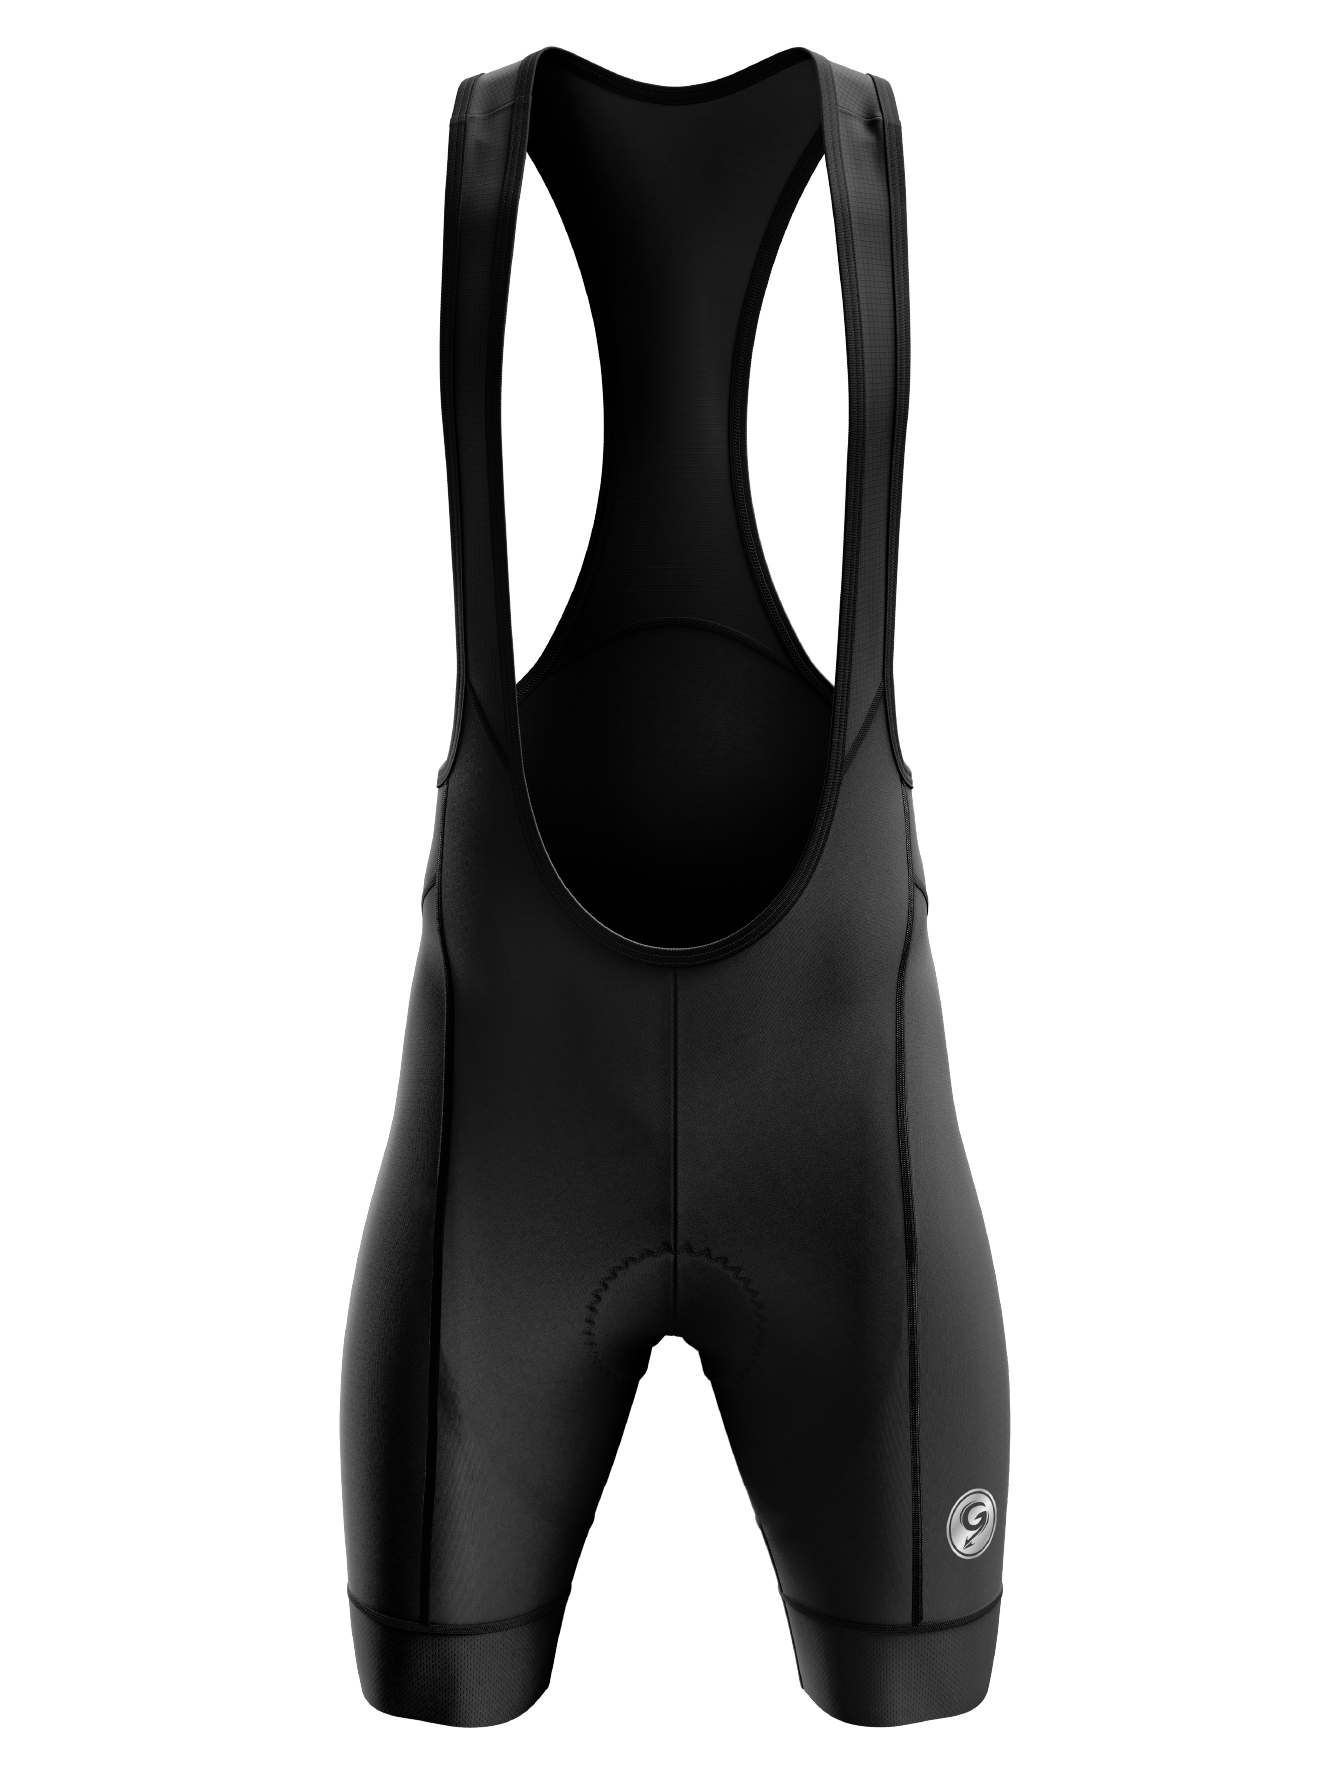 EKOI 3D GEL PERF Black HEXA bib shorts